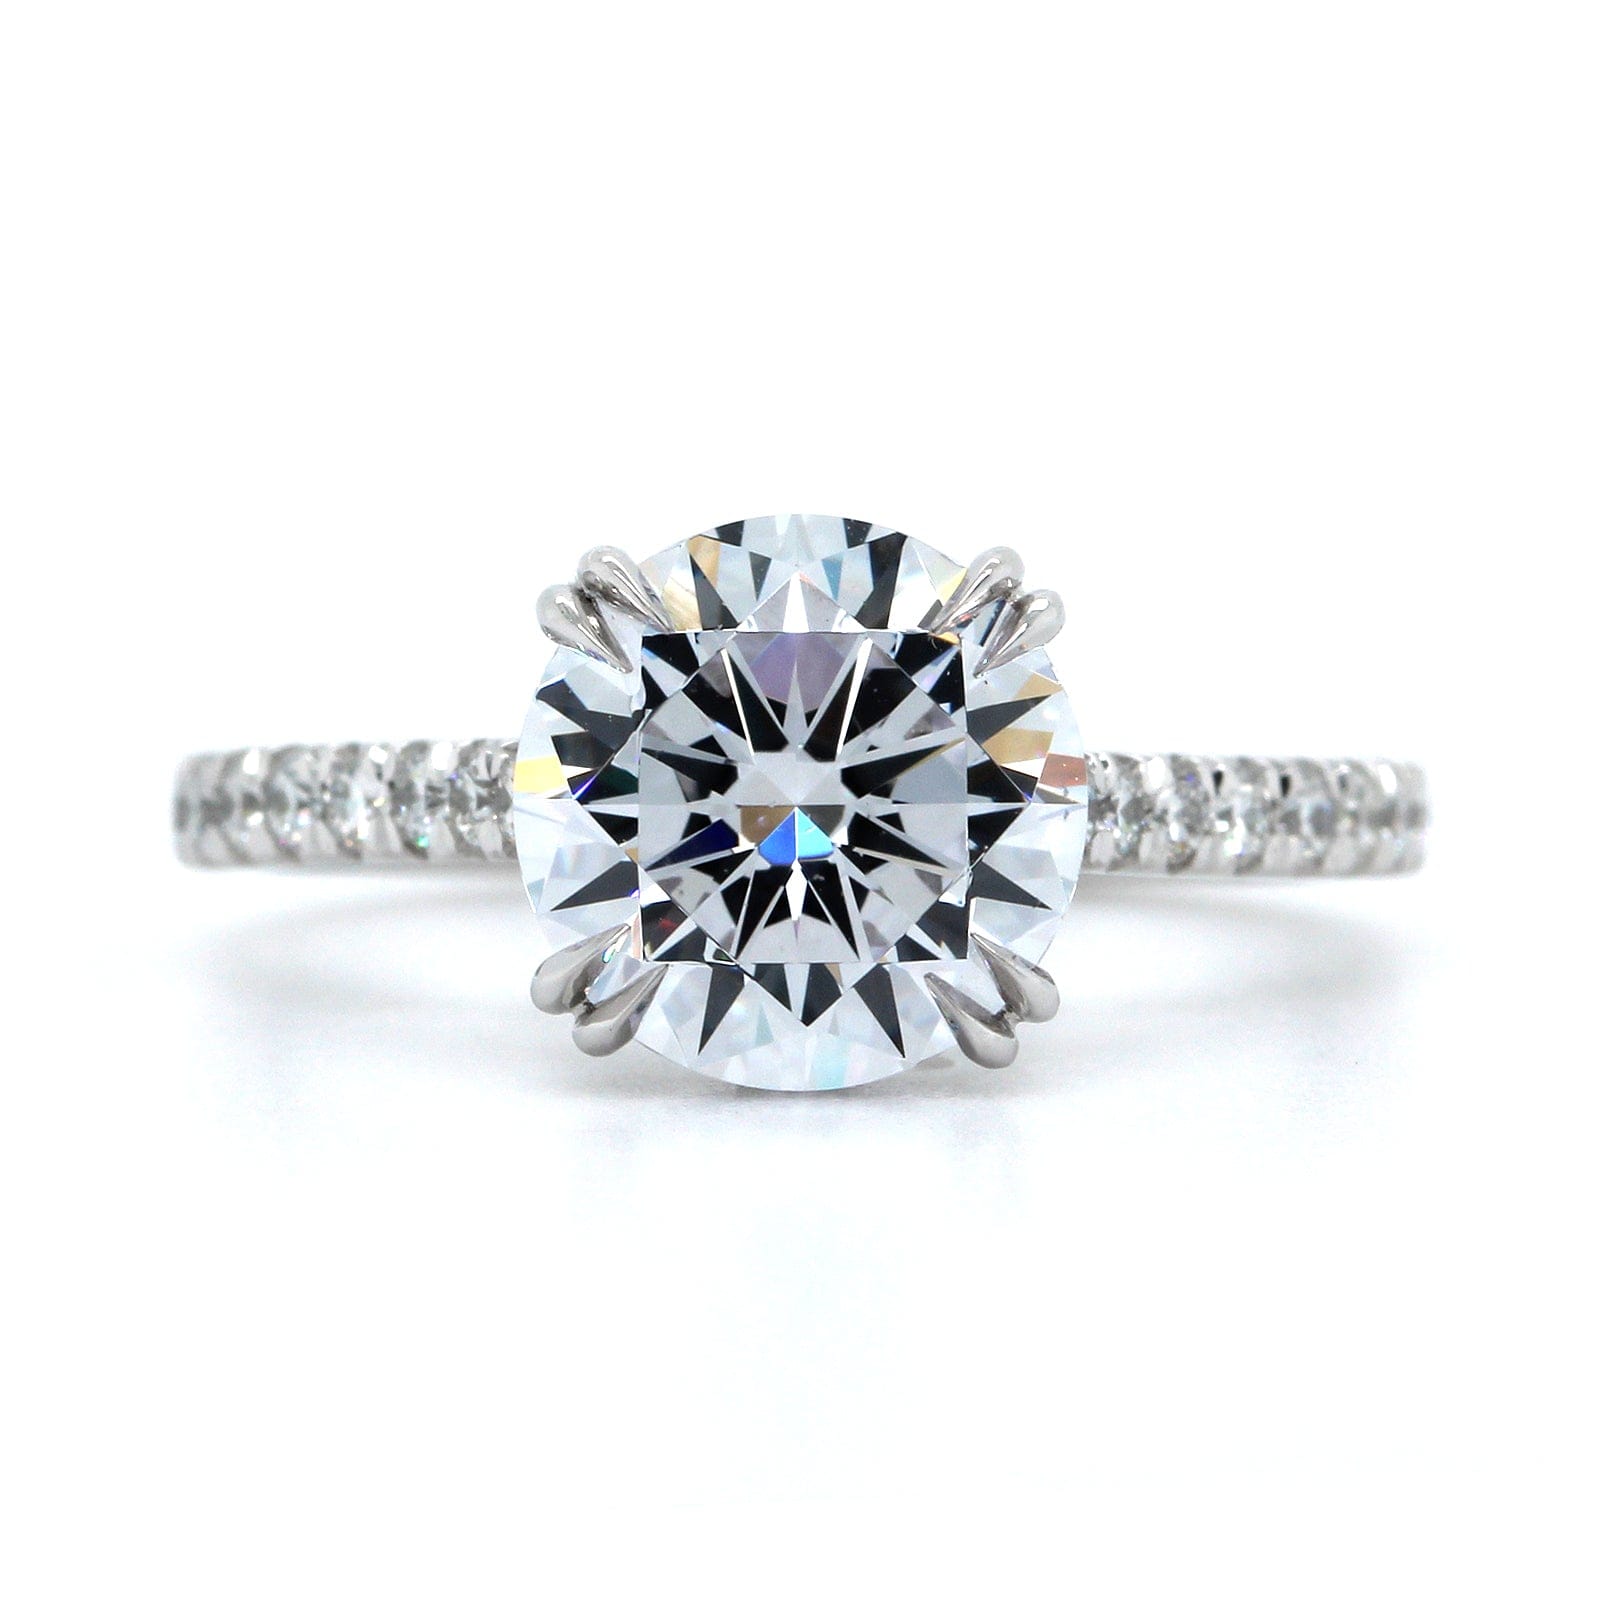 Platinum Double V Prong Diamond Engagement Ring Setting, Platinum, Long's Jewelers